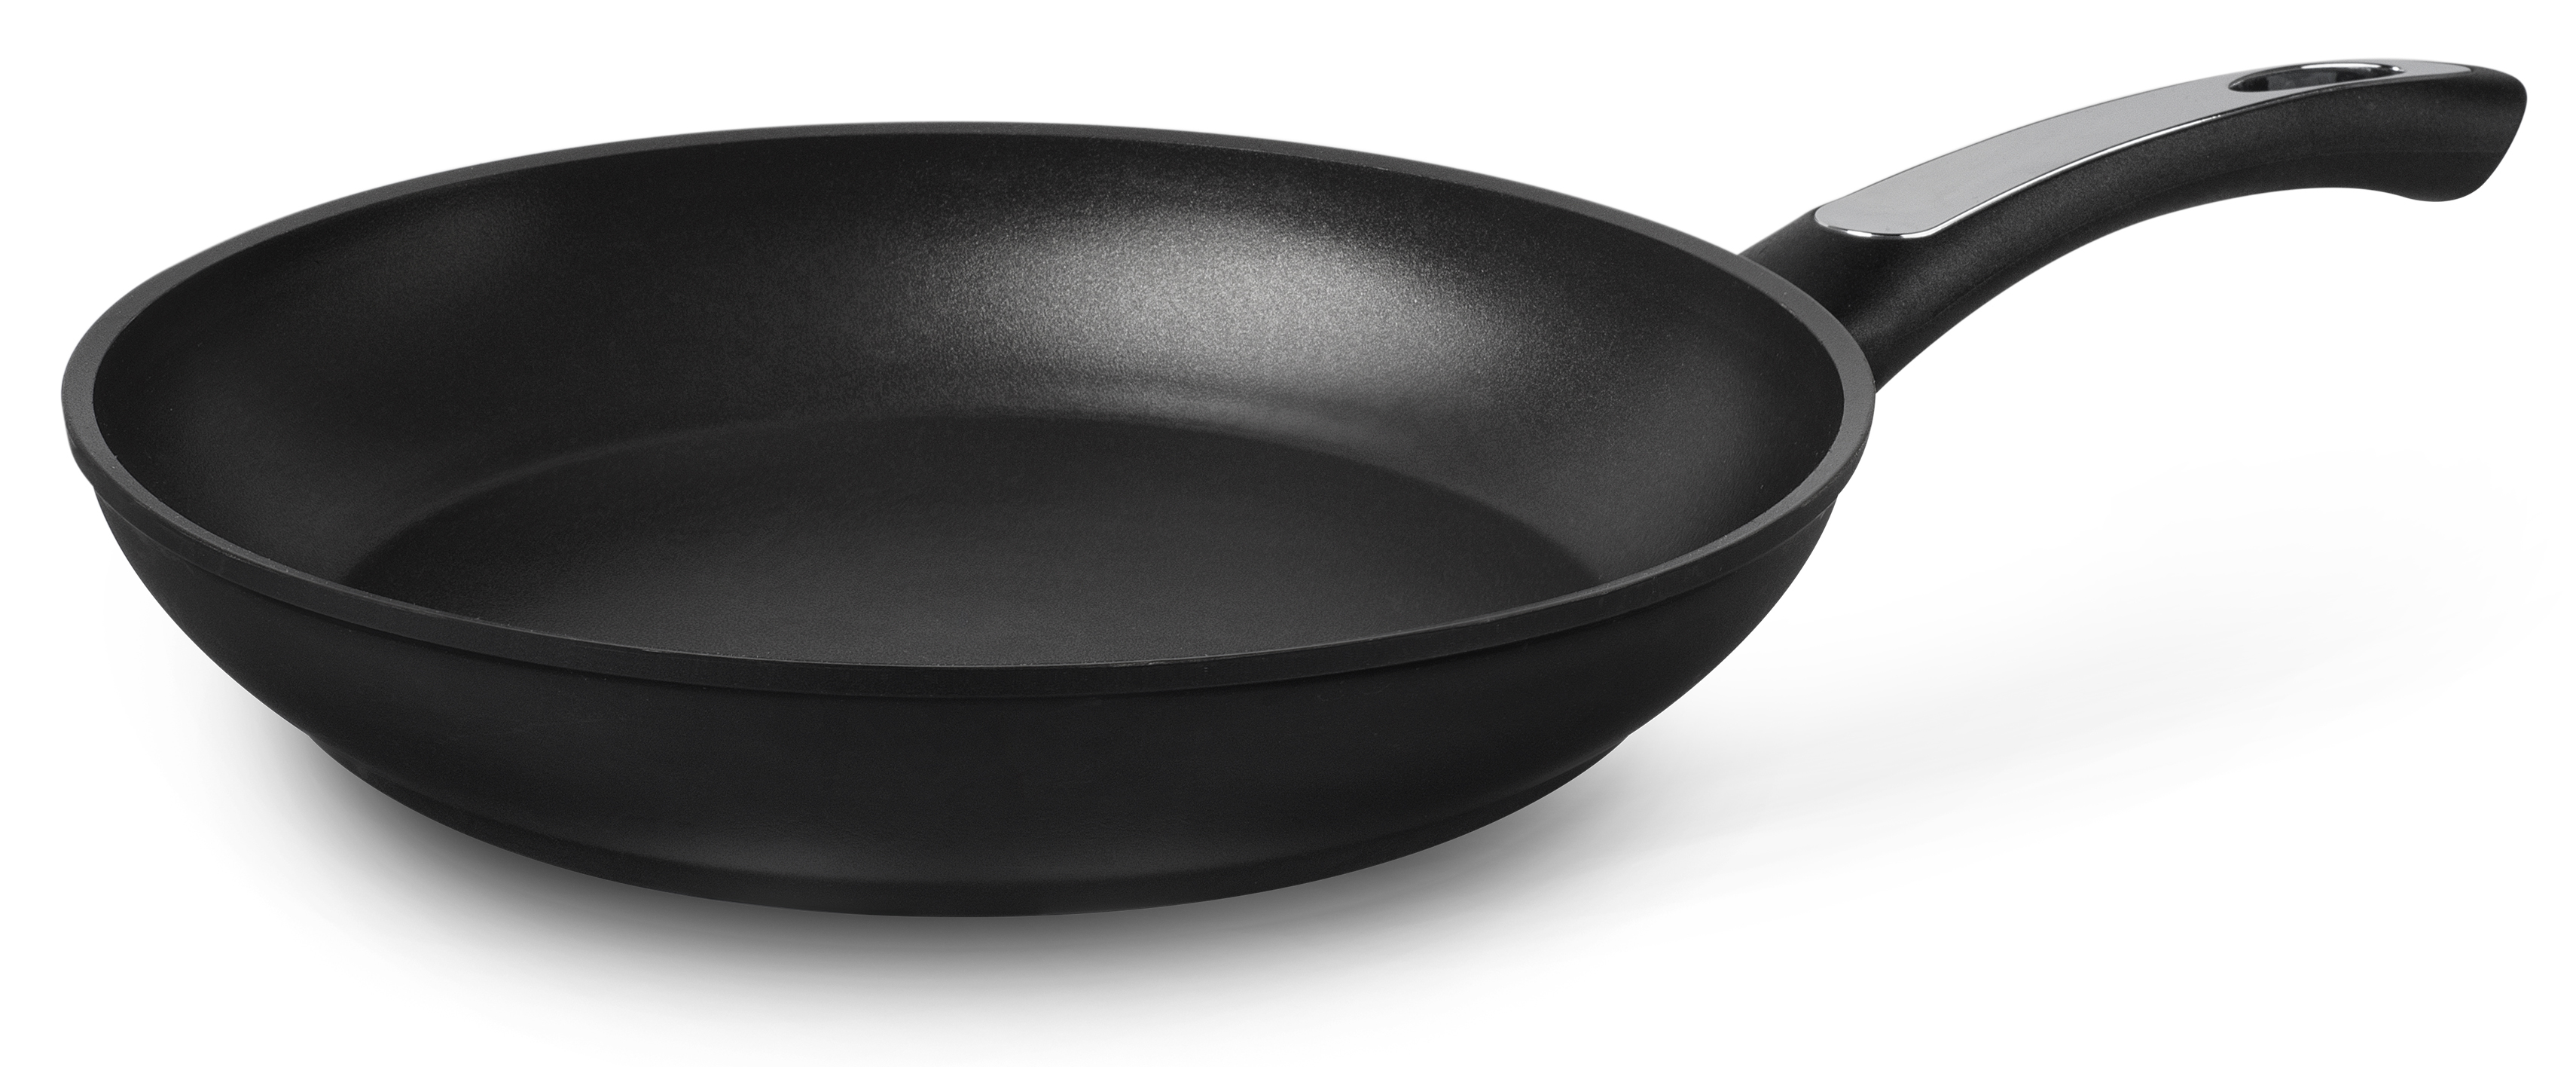 Make pan. Сковорода Webber Black Onyx be-4512/20n 20 см. Сковорода 40 см. Сковорода padella cm40 093740 frying Pan.